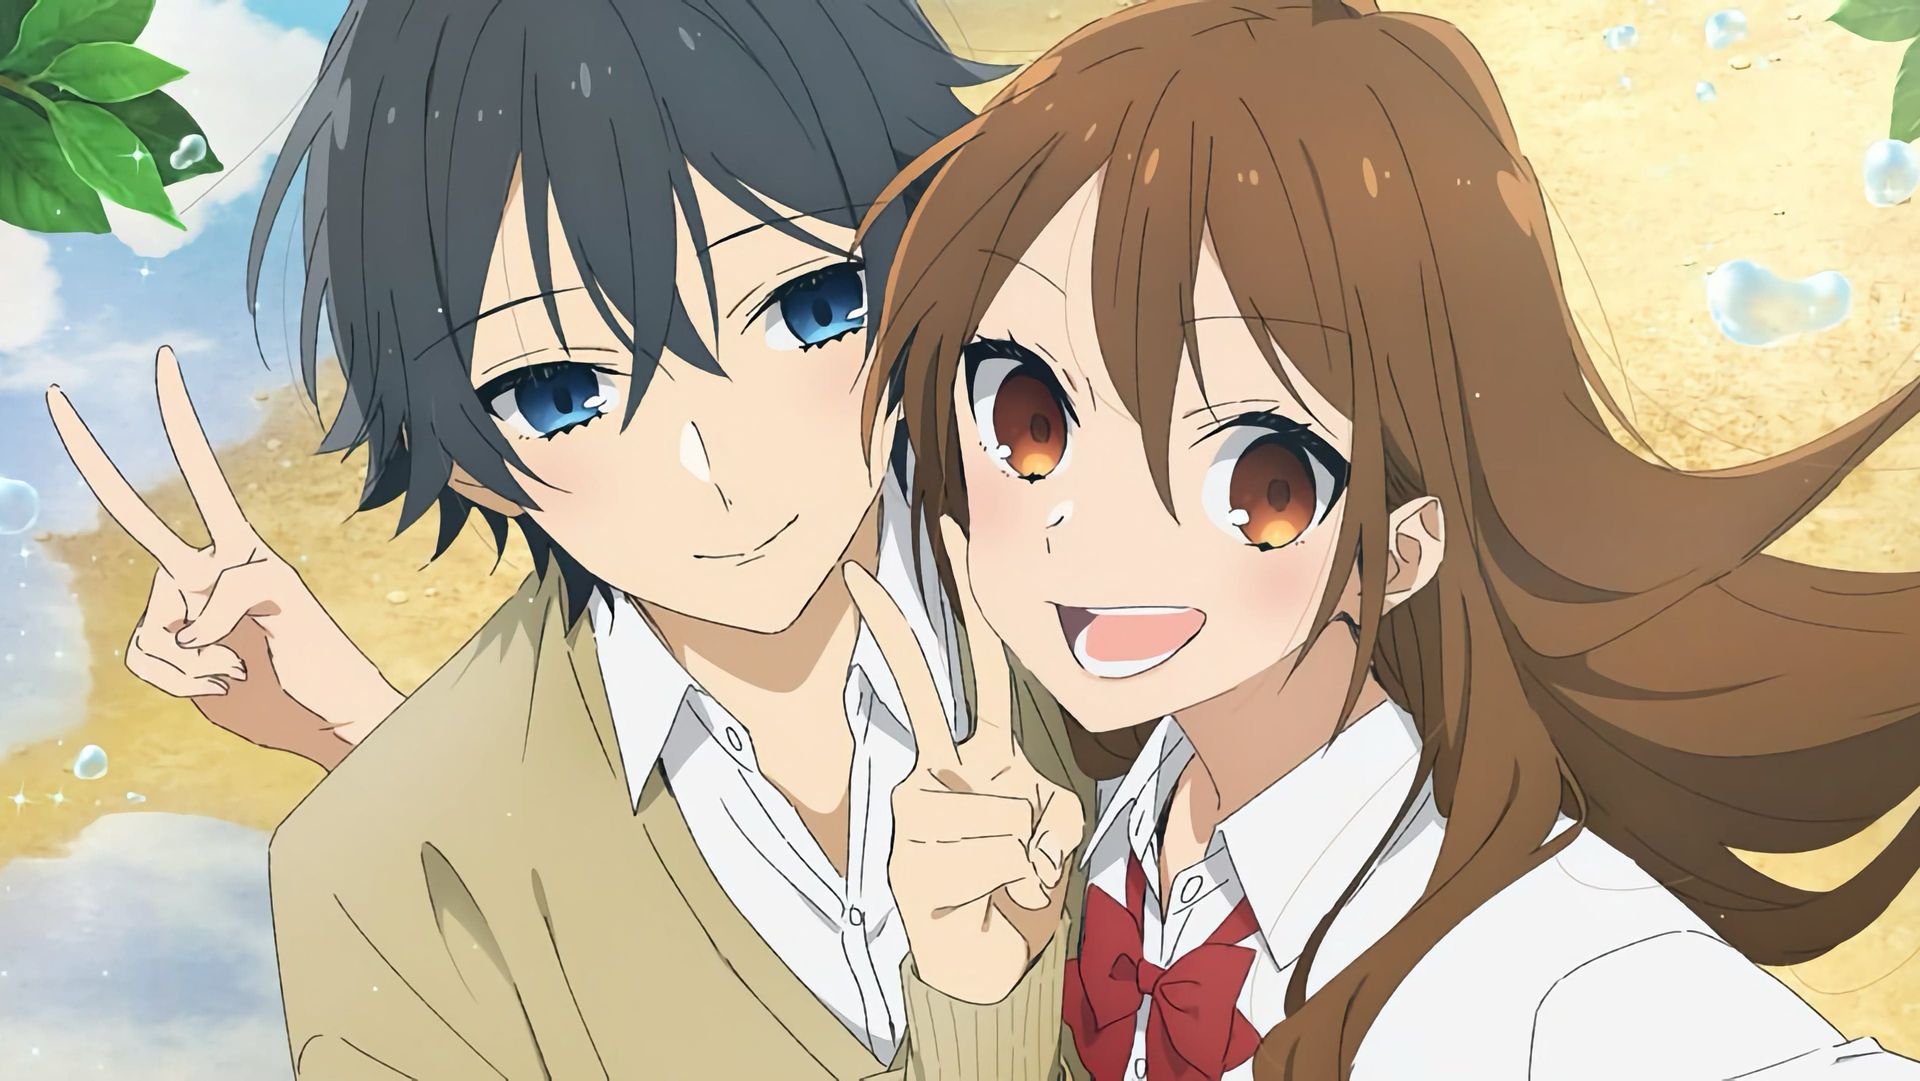 Romantic Comedy Manga Horimiya Gets TV Anime